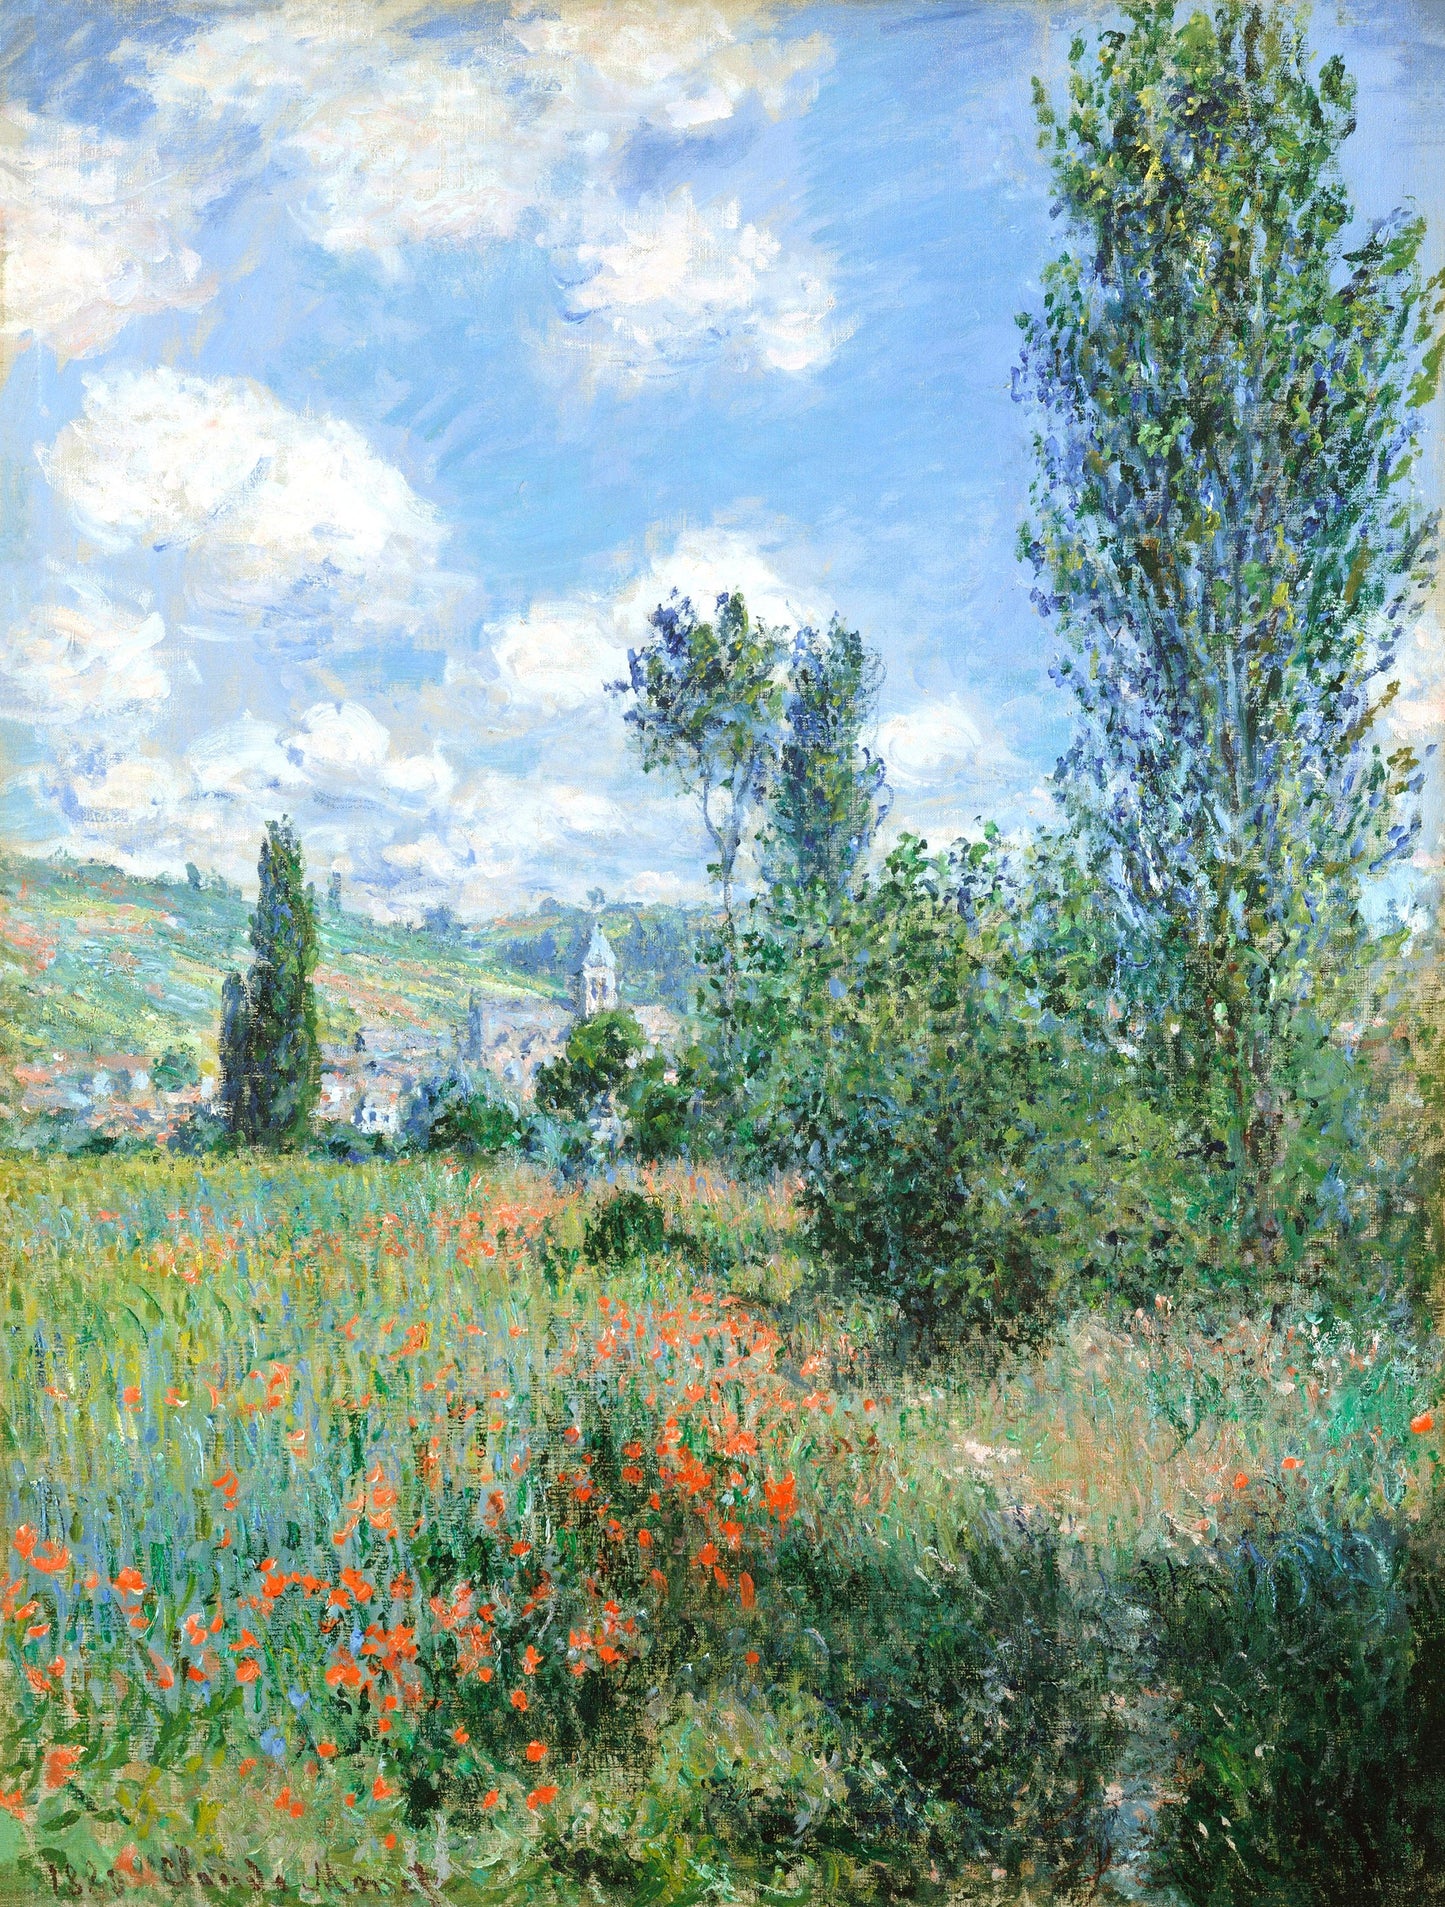 Claude Monet Impressionist Paintings Set 2 [19 Images]